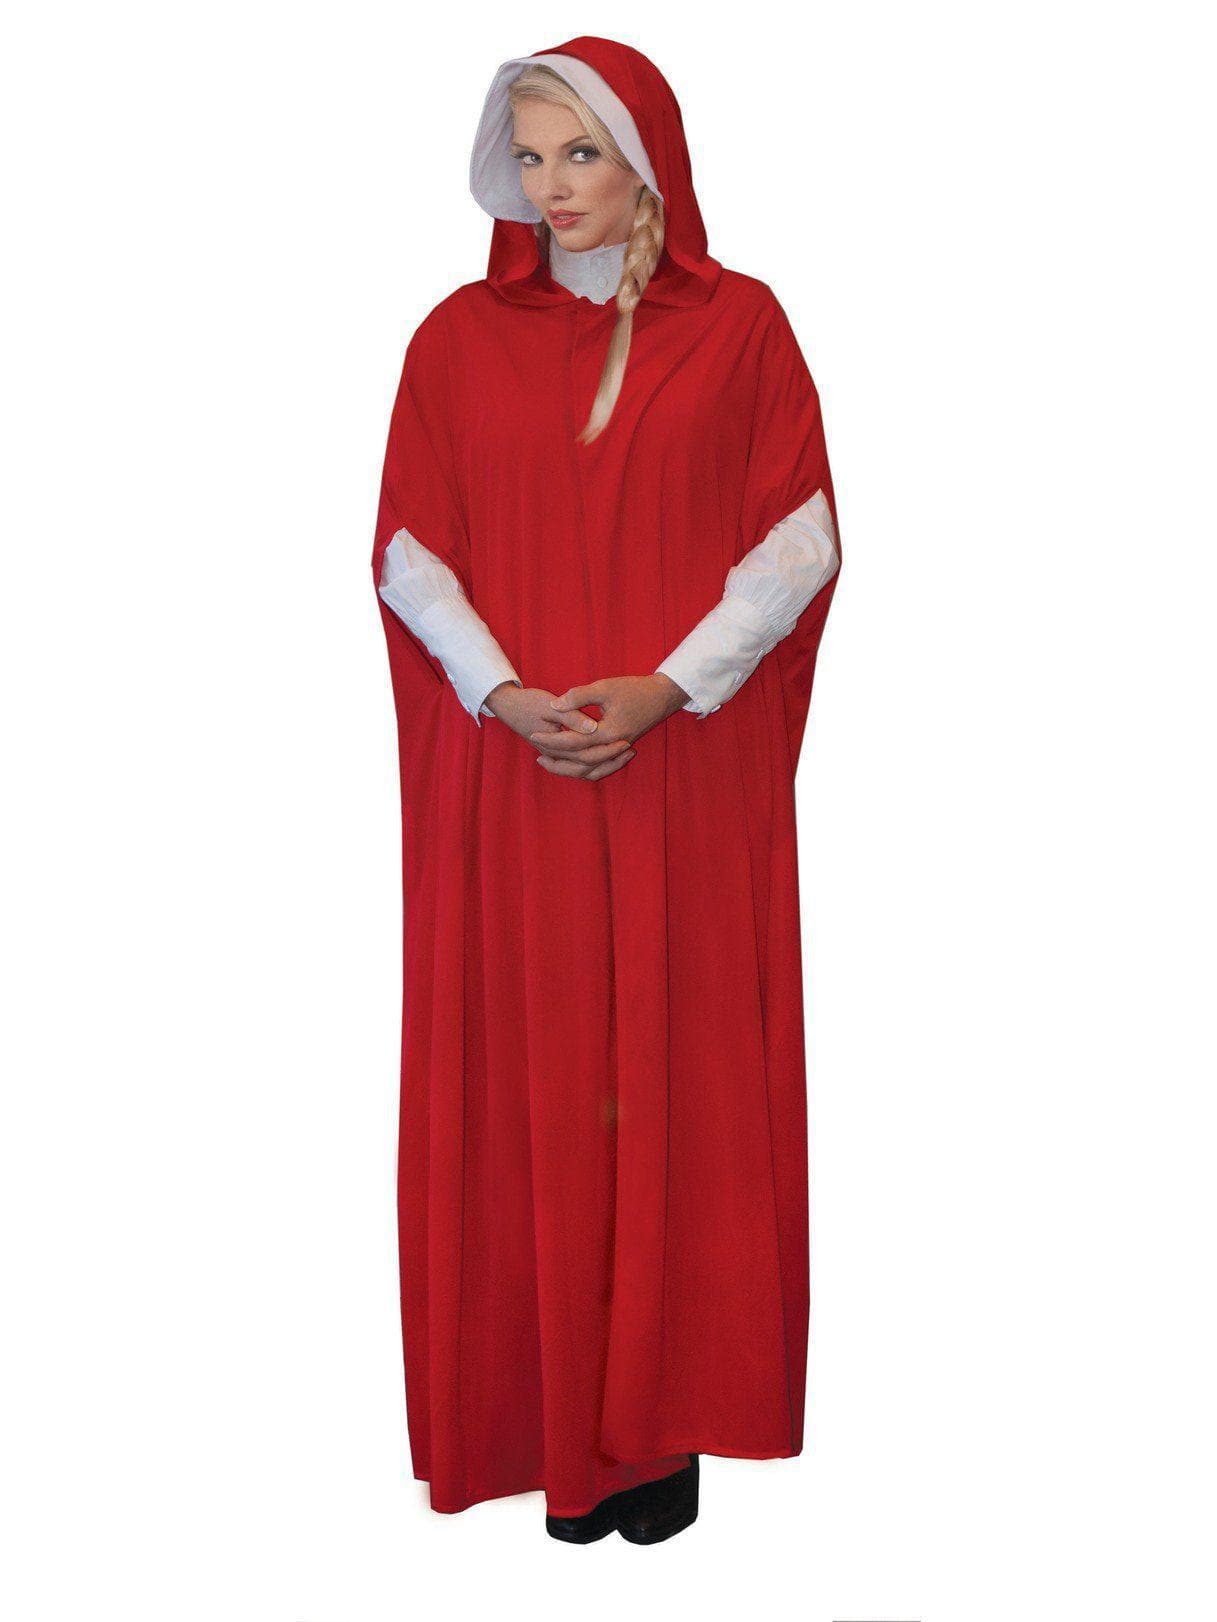 Adult Red Maiden Costume - costumes.com